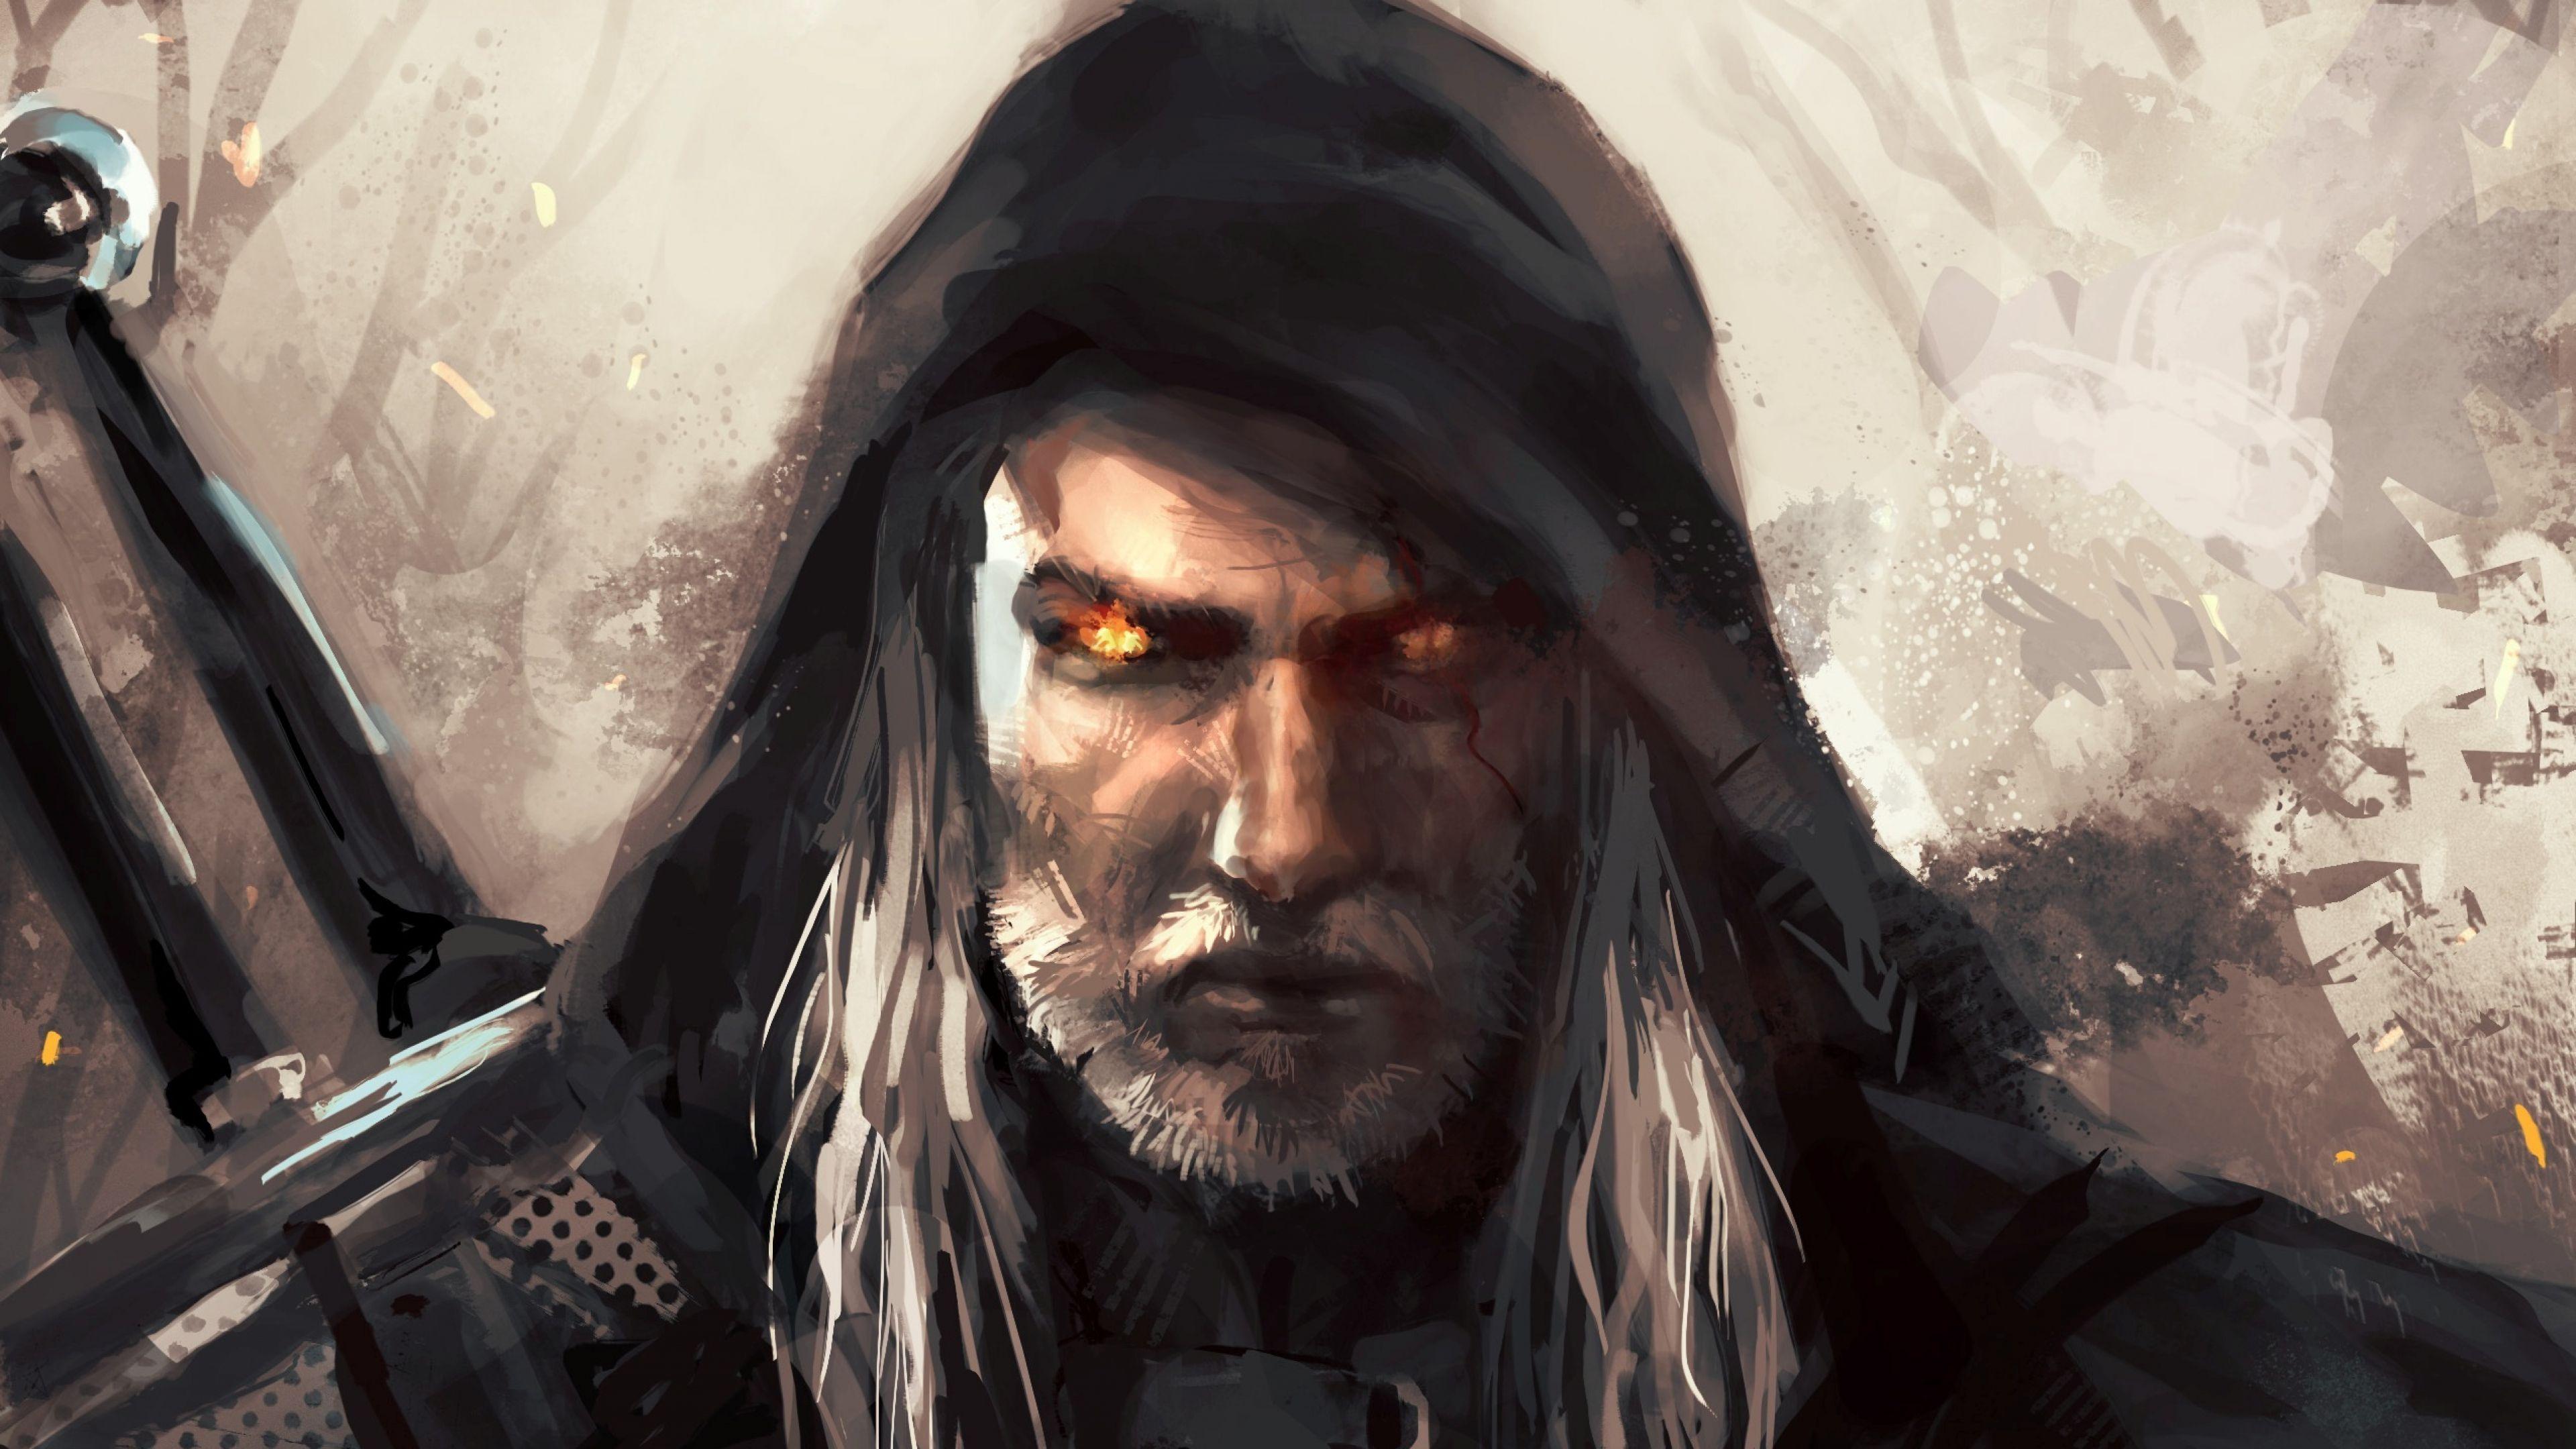 Download Wallpaper 3840x2160 The witcher, Geralt of rivia, Art 4K